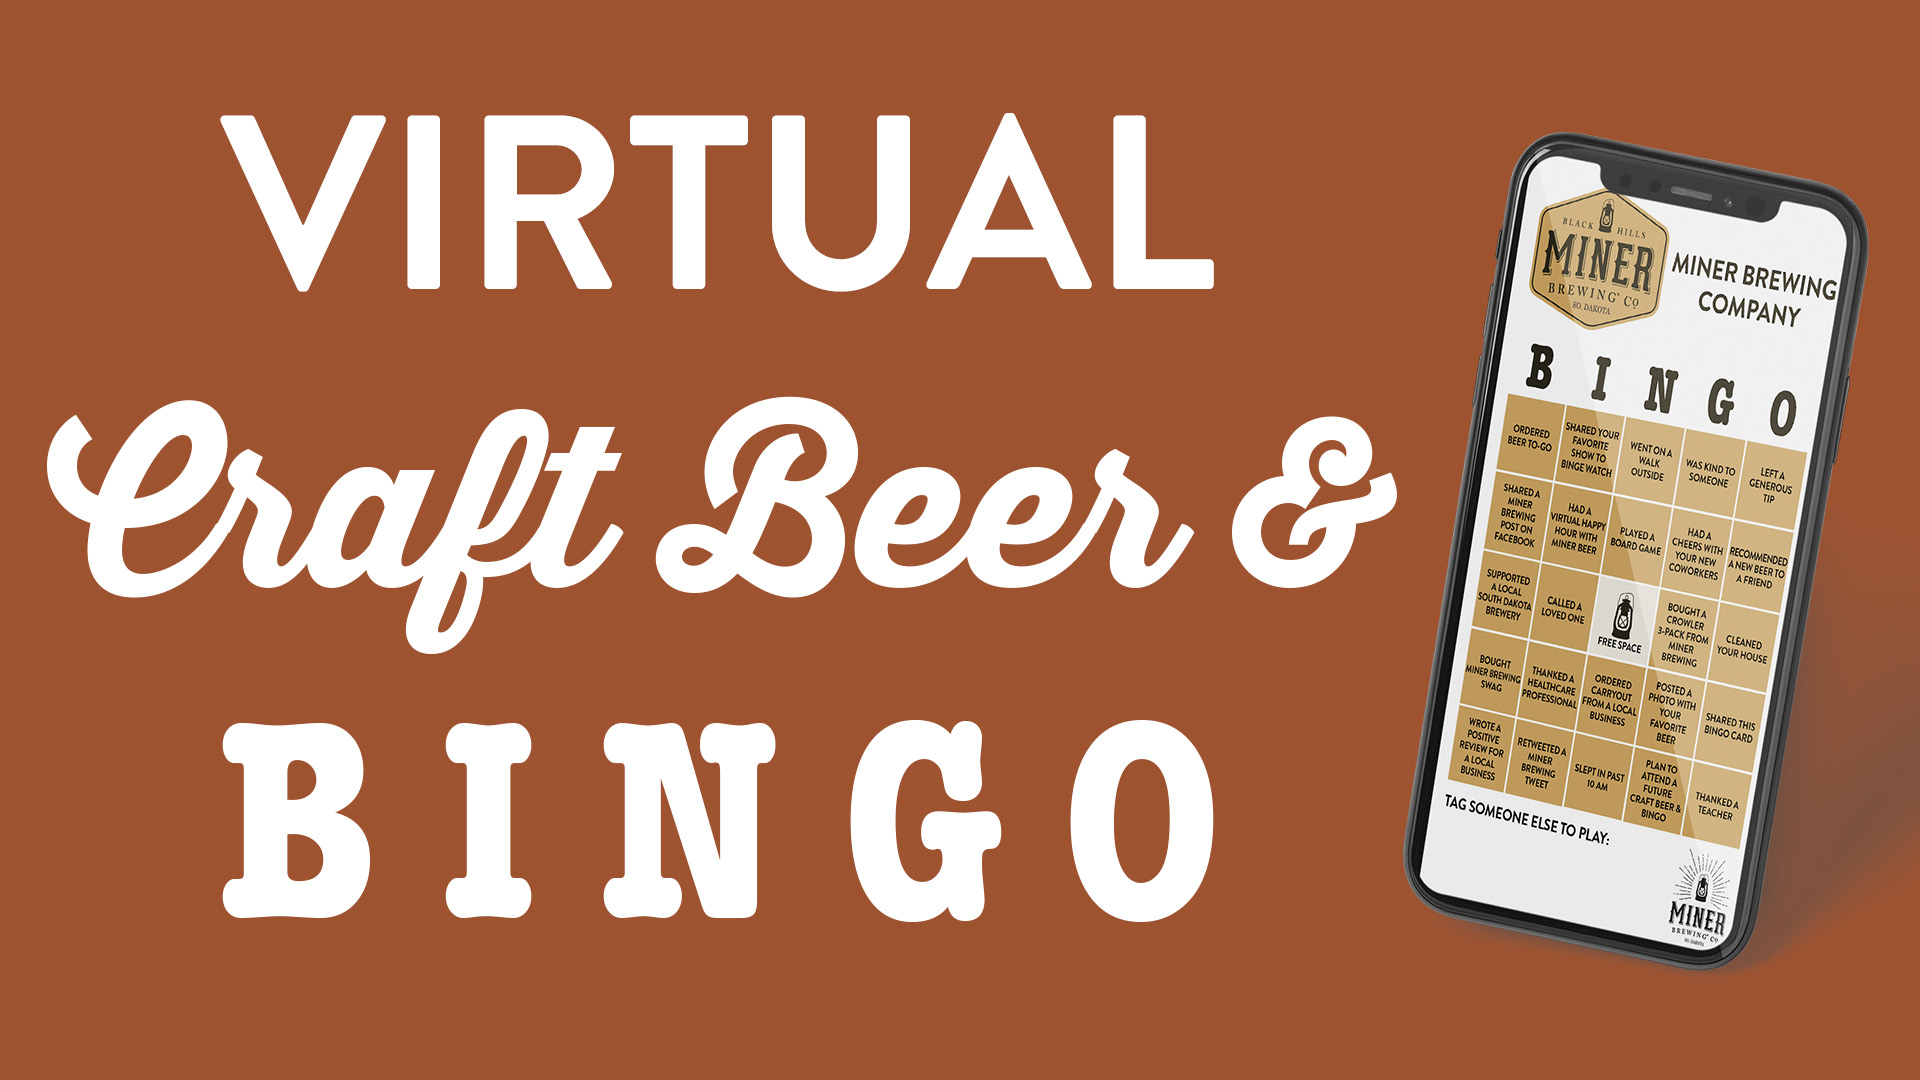 Virtual bingo event